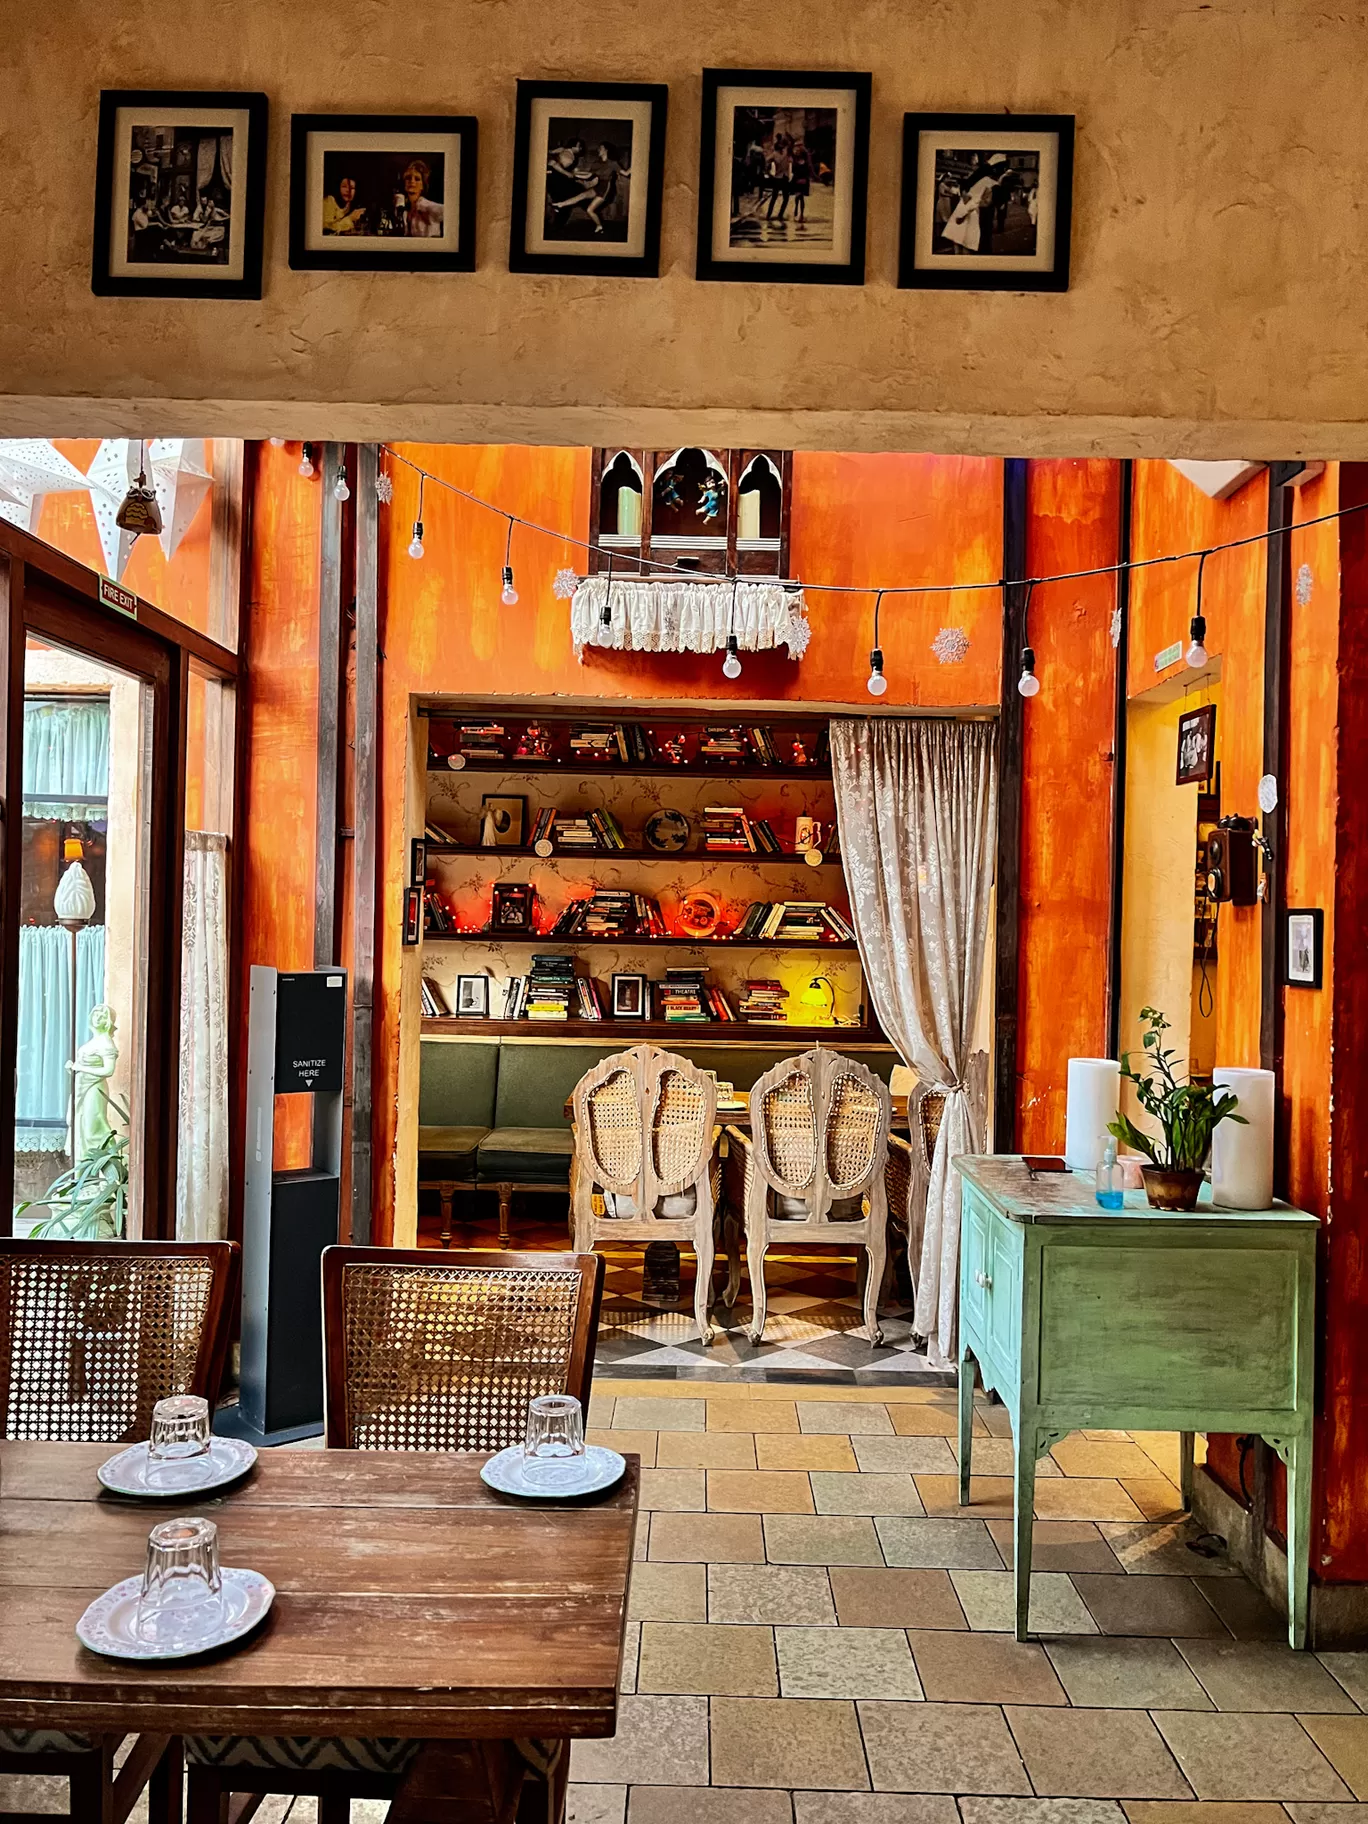 Photo of The Homemade Cafe Juhu By Kadambari Bhatte (curlytravelmess)